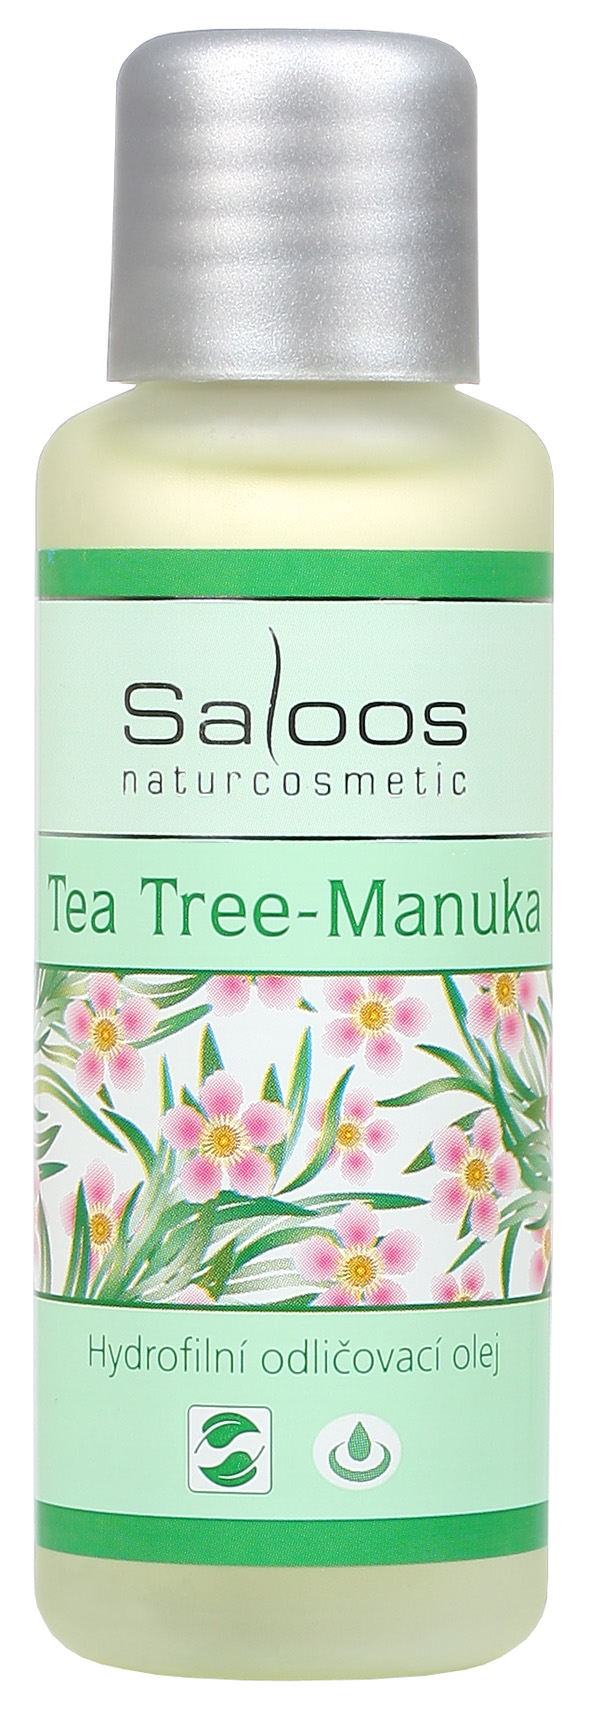 Tea tree Manuka odličovací olej - Saloos Objem: 500 ml